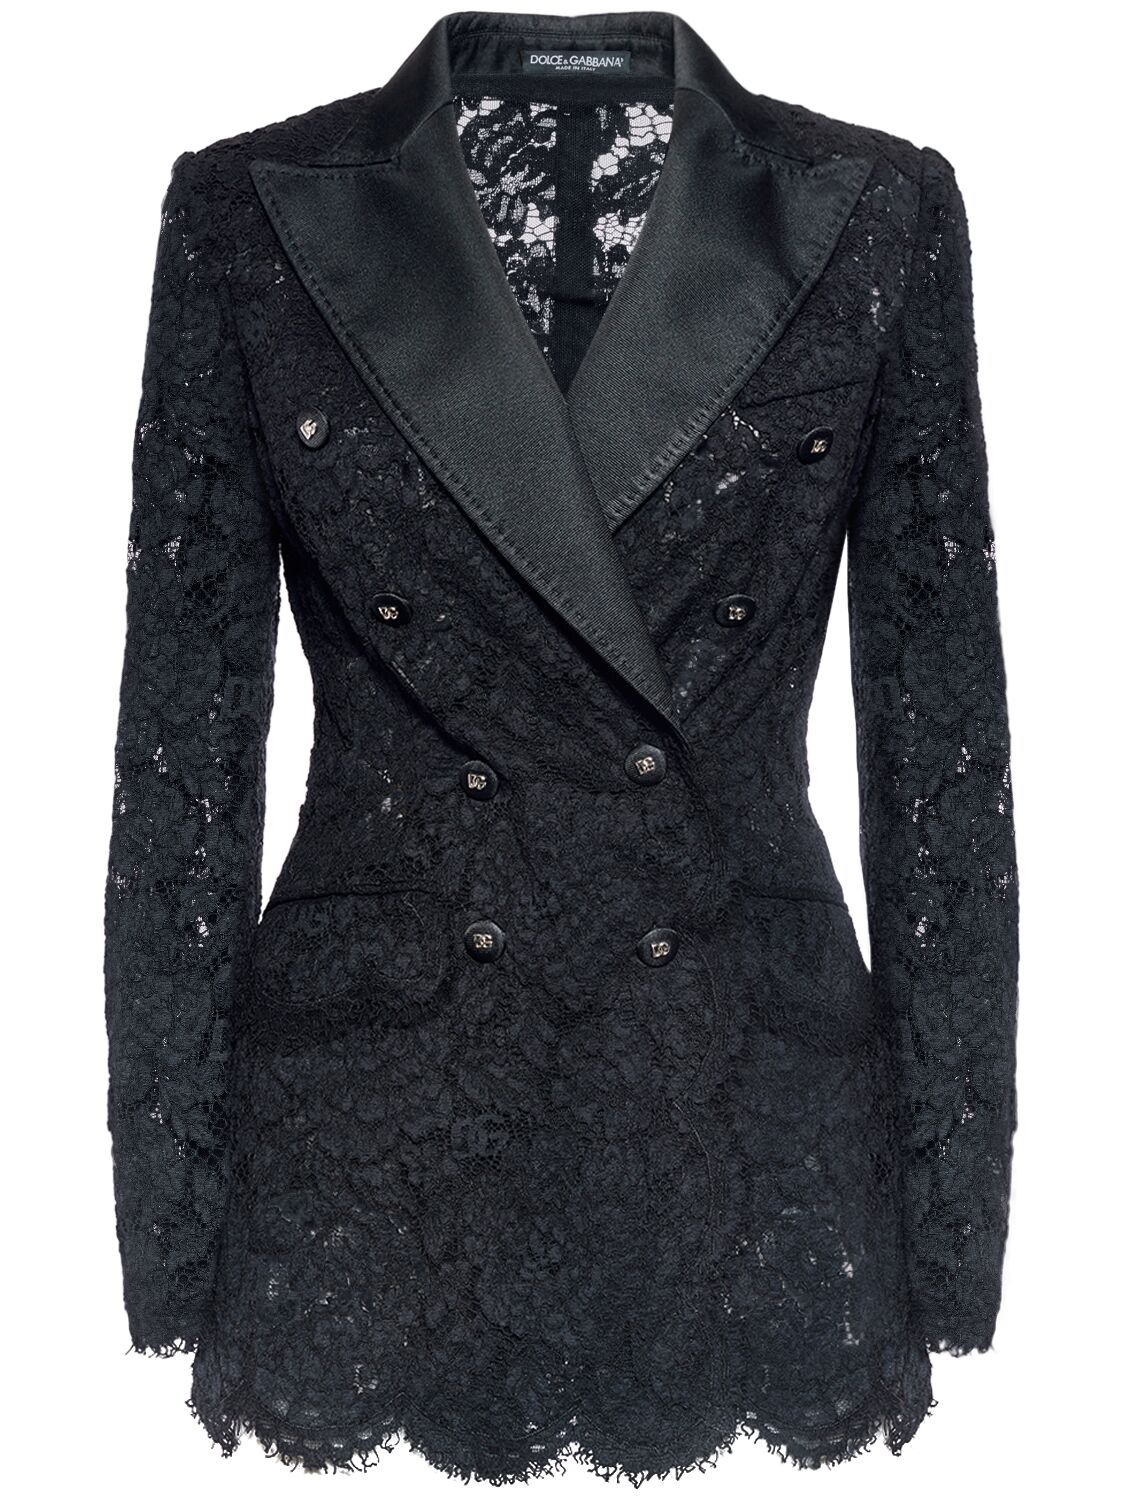 Dolce & Gabbana Floral & Dg Lace Tuxedo Jacket In Black